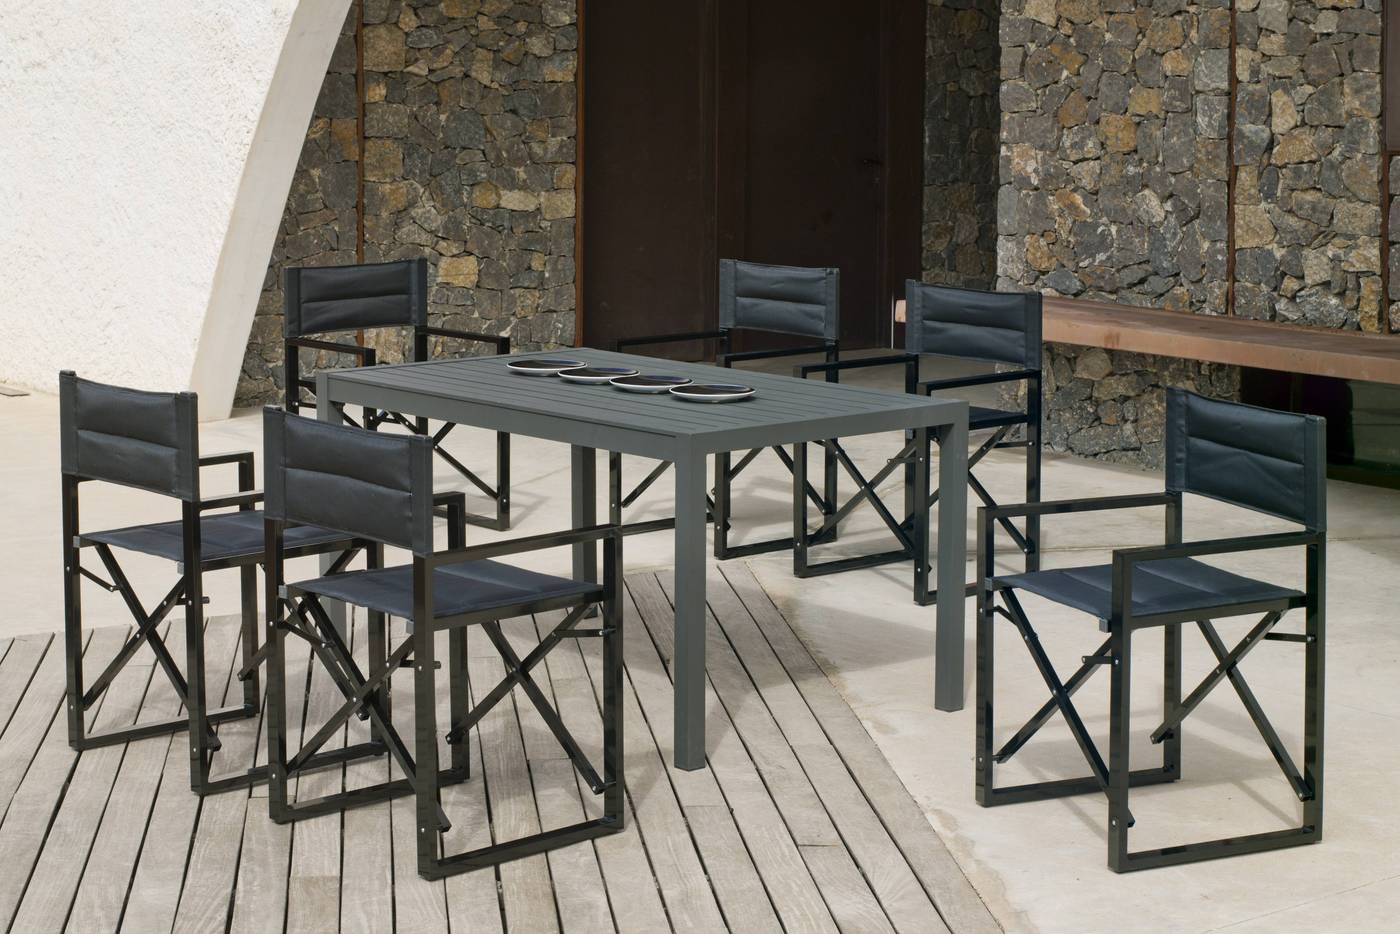 Conjunto aluminio luxe: Mesa rectangular 150 cm + 6 sillones plegables. Disponible en color blanco o antracita.